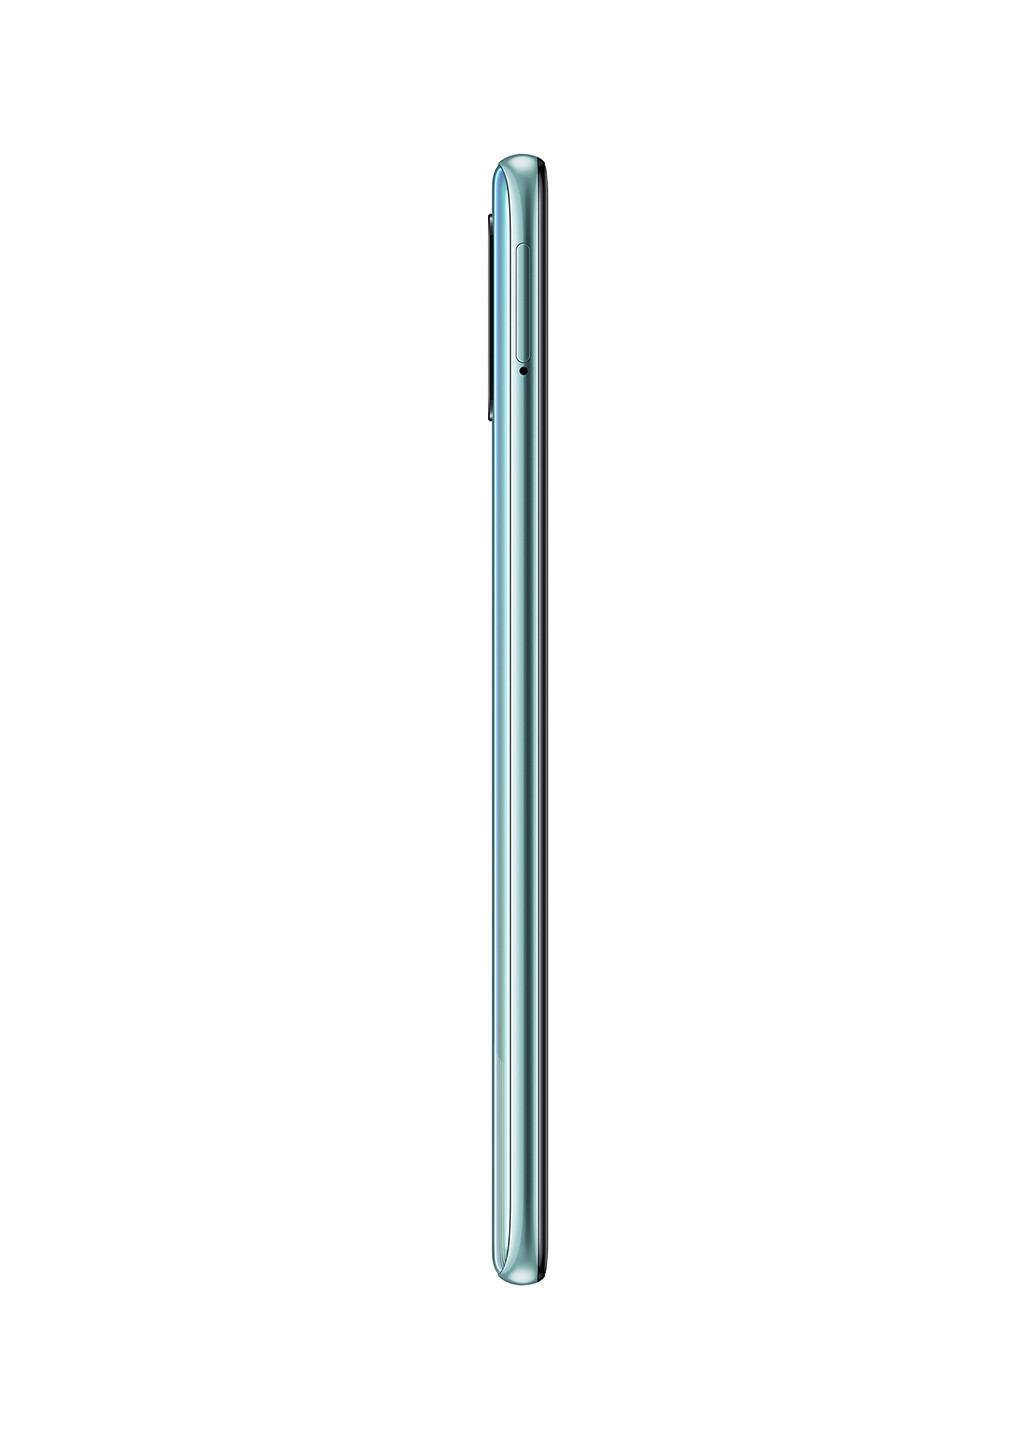 Смартфон Samsung Galaxy A51 6/128Gb Prism Crush Blue (SM-A515FZBWSEK) синий